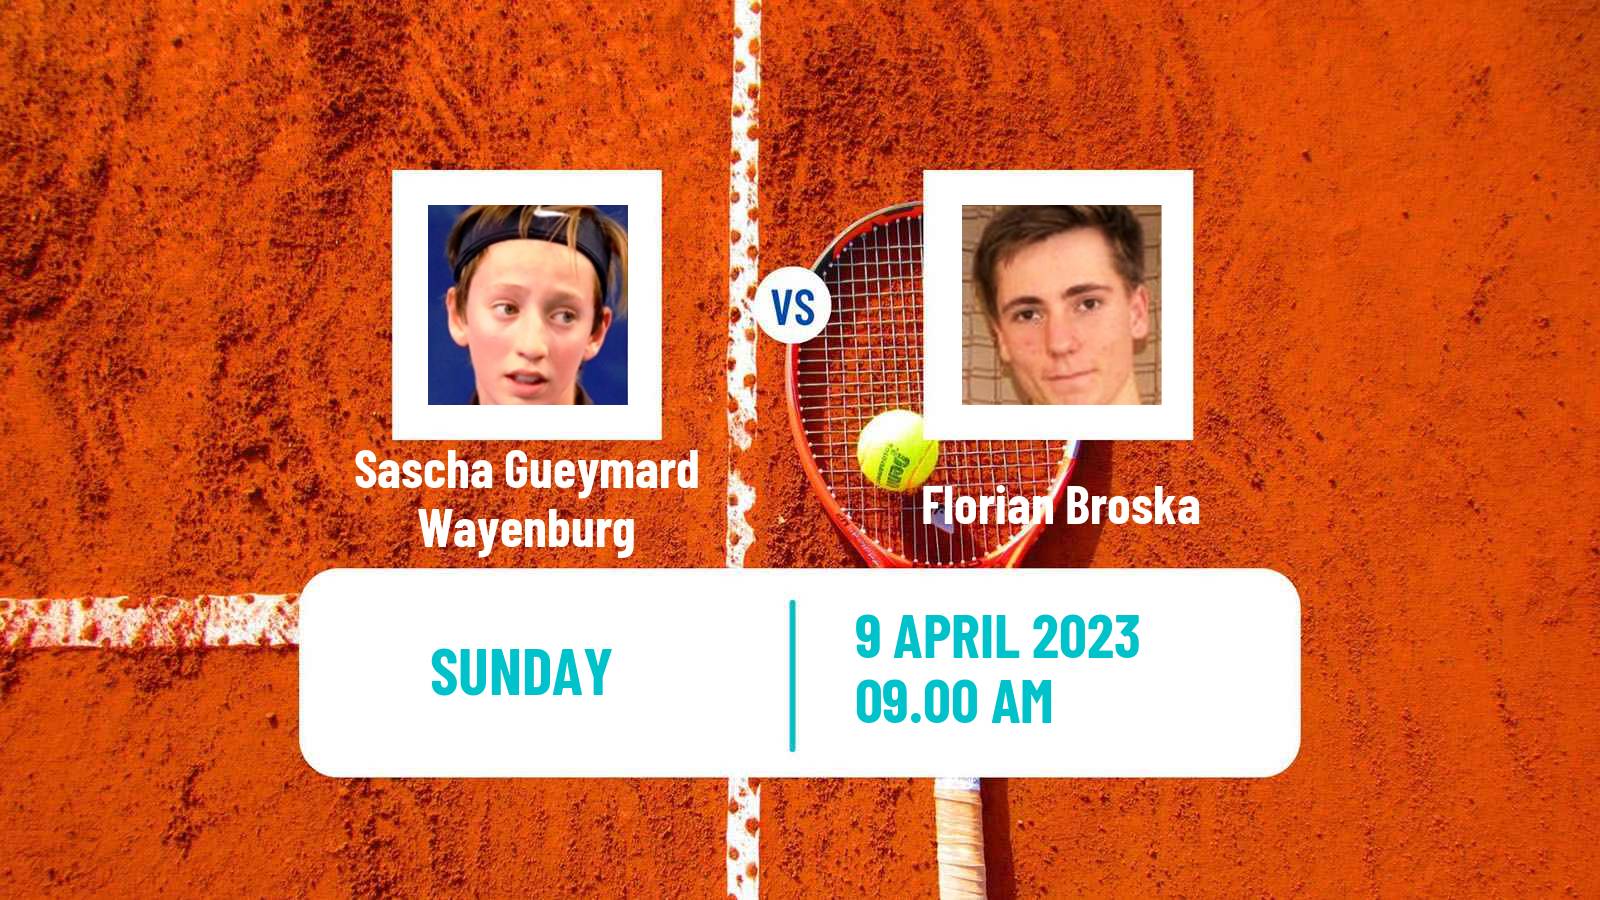 Tennis ITF Tournaments Sascha Gueymard Wayenburg - Florian Broska